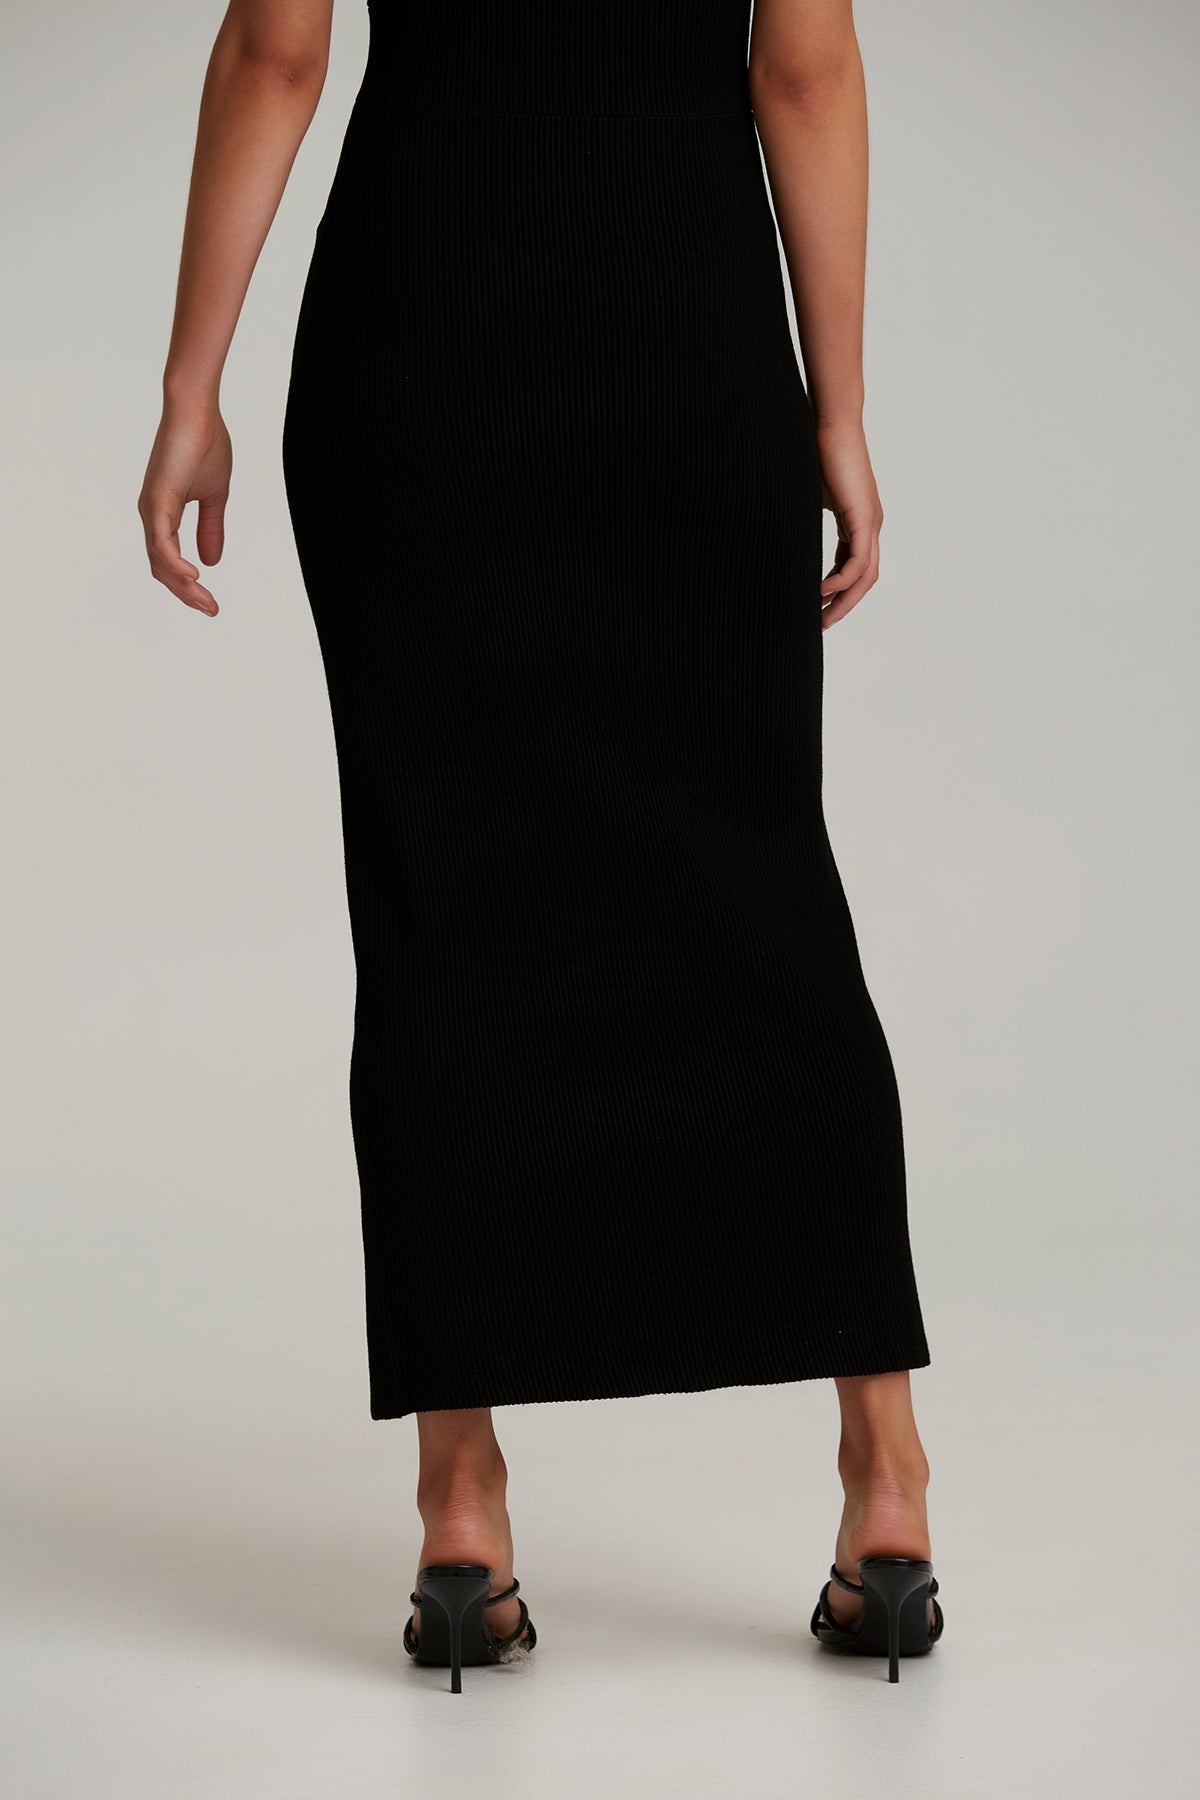 C/MEO Collective - Element Knit Dress - Black